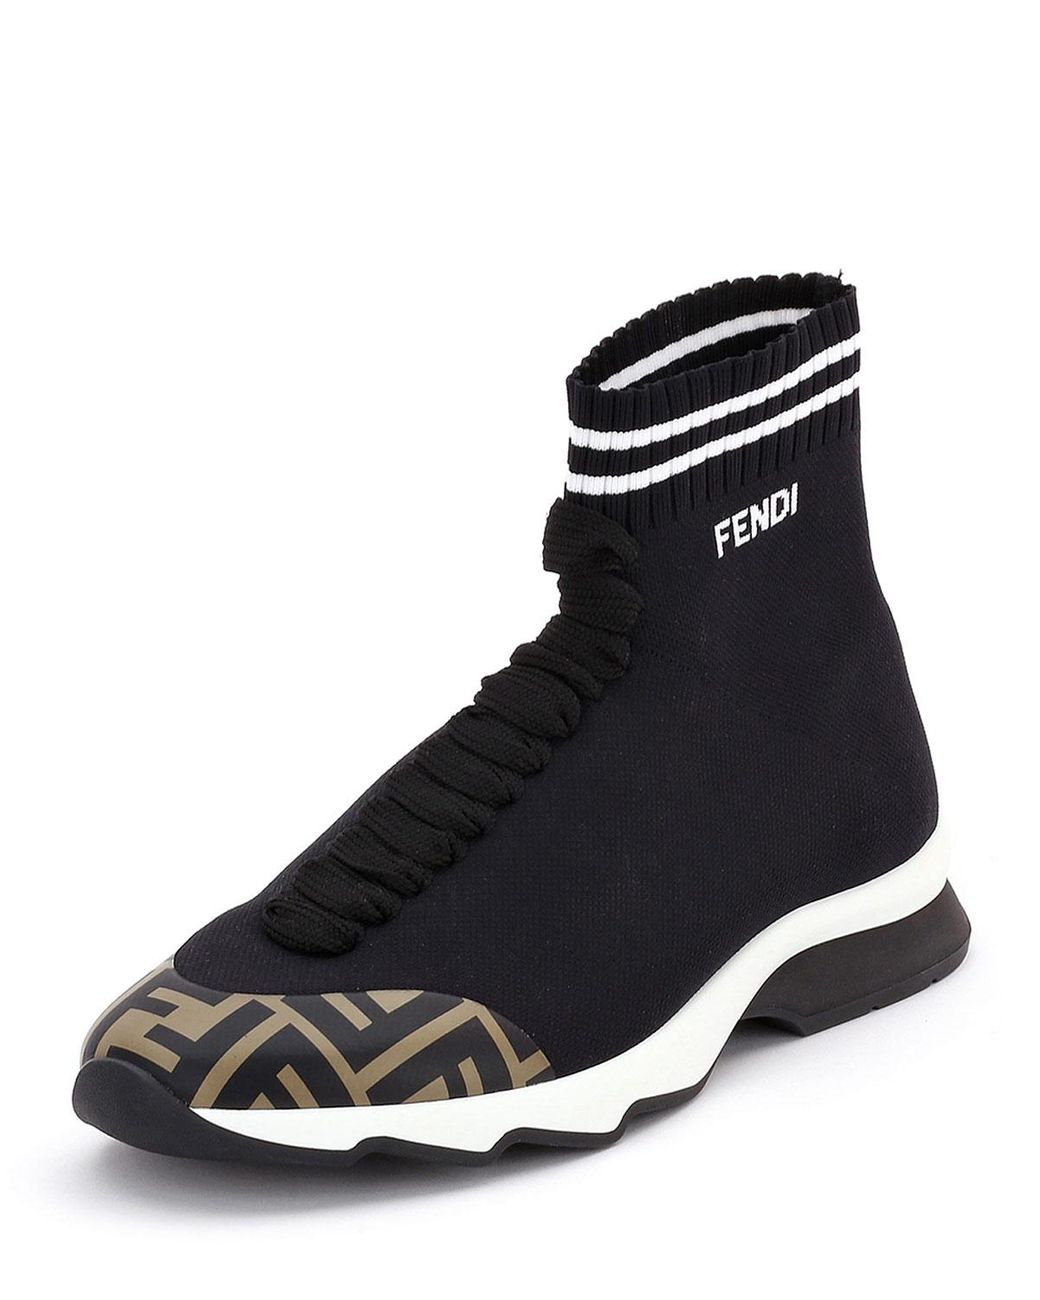 Fendi Synthetic Sock Sneakers in Black - Save 62% - Lyst